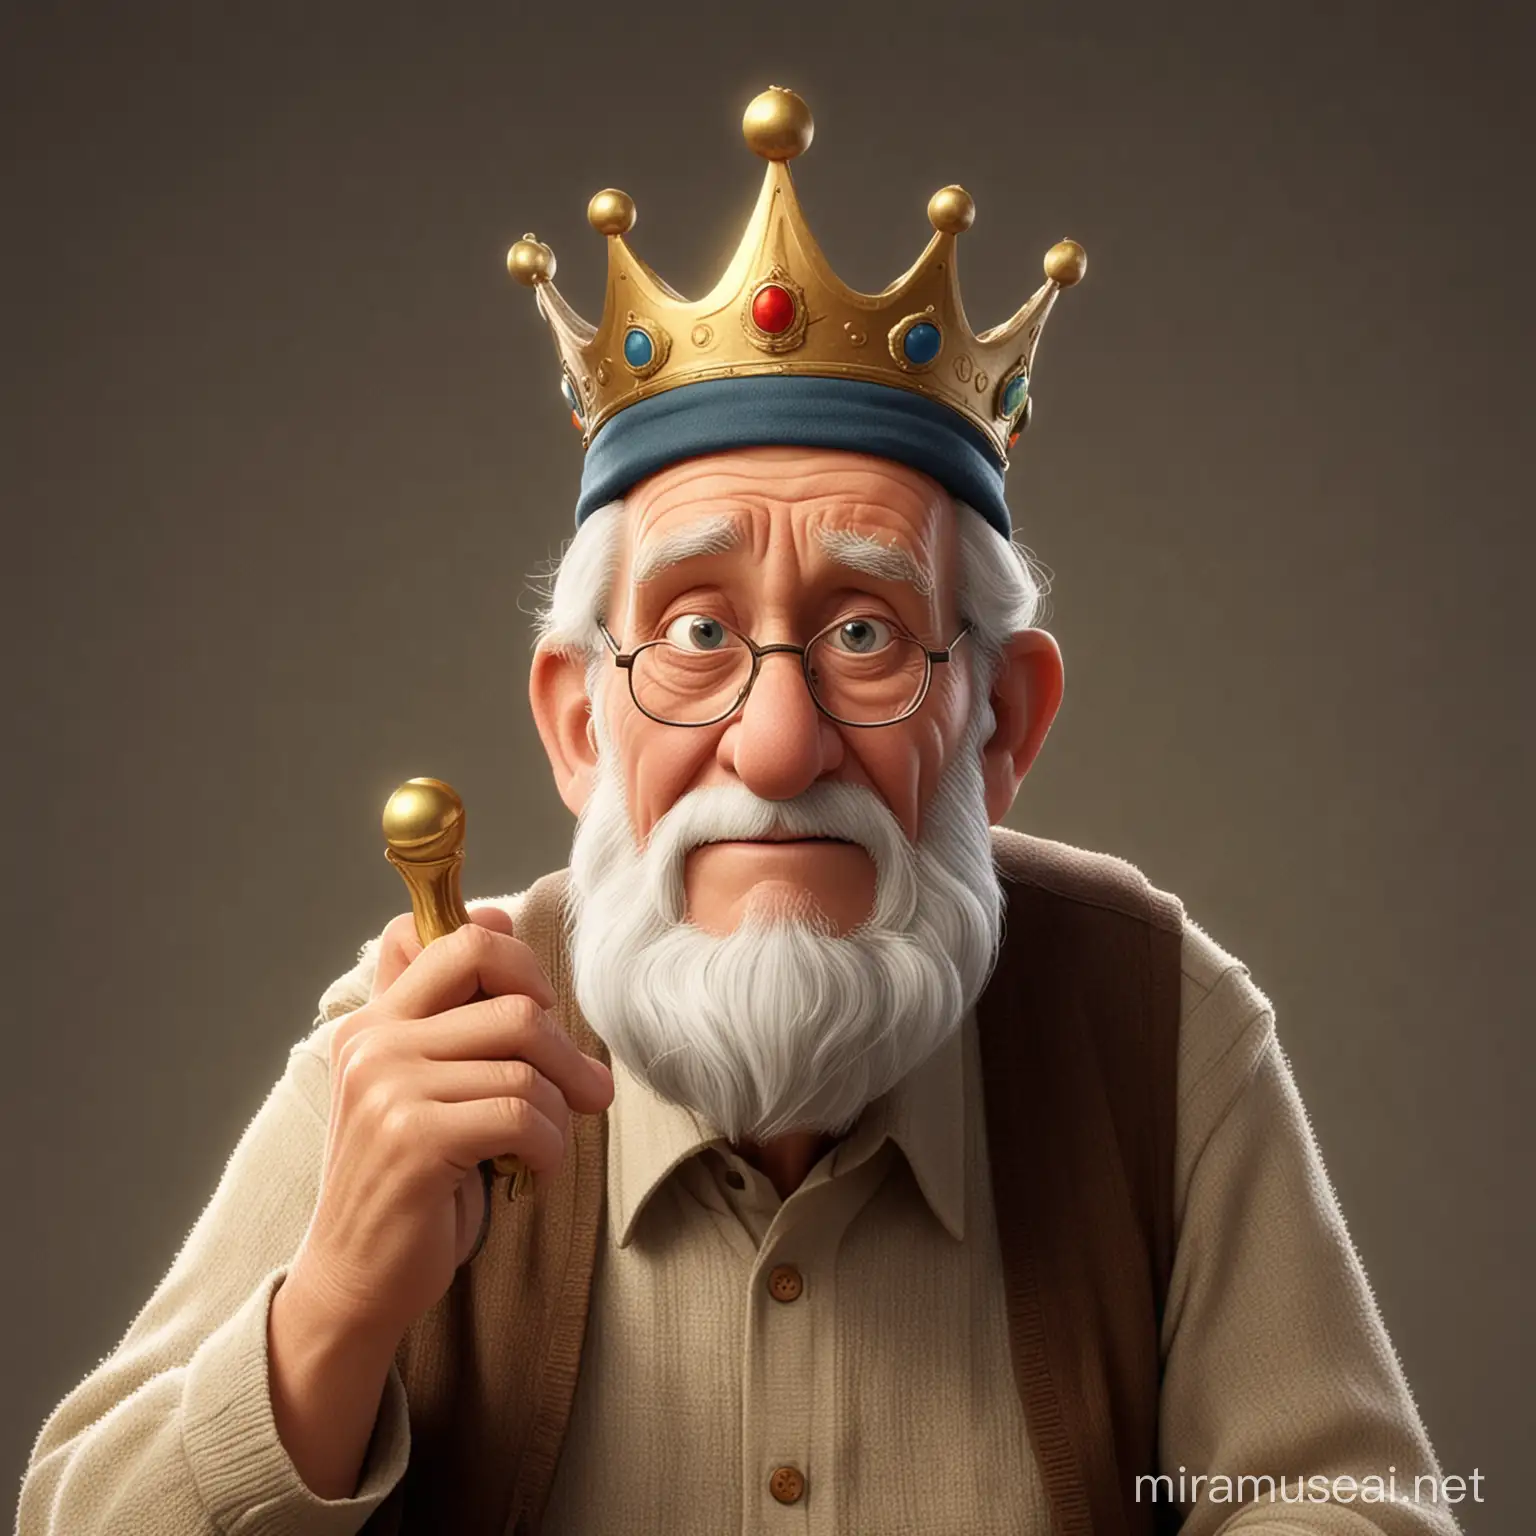 Elderly Man Contemplating Emergency Call with Crown Disney Pixar Style